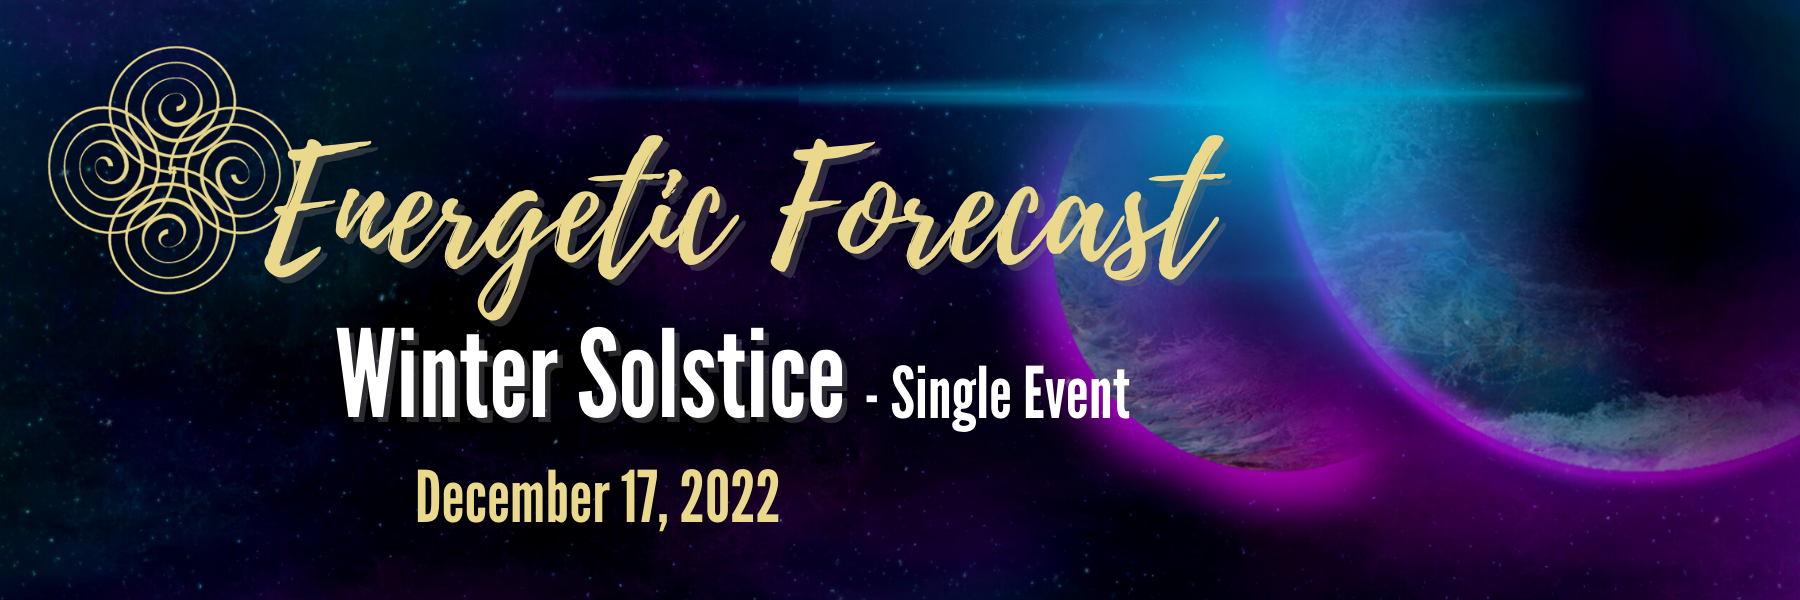 Energetic Forecast - Winter Solstice 2022 - Single Event